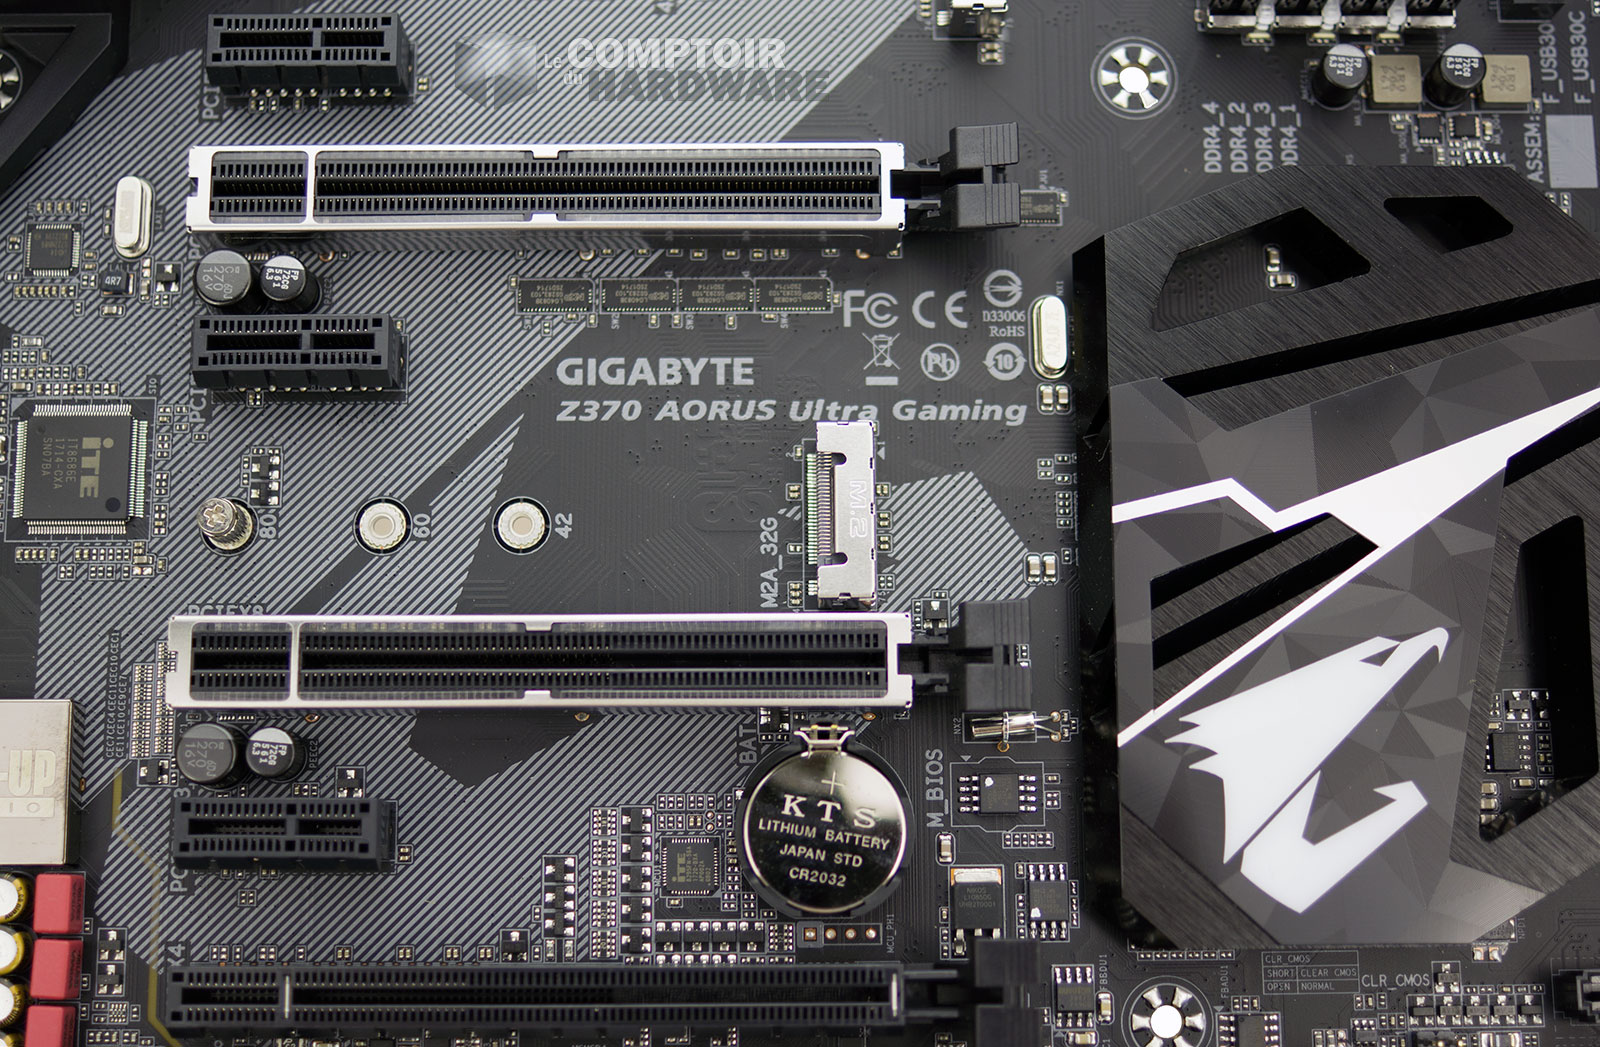 Gigabyte Z370 Aorus Extreme Gaming : slots PCIe